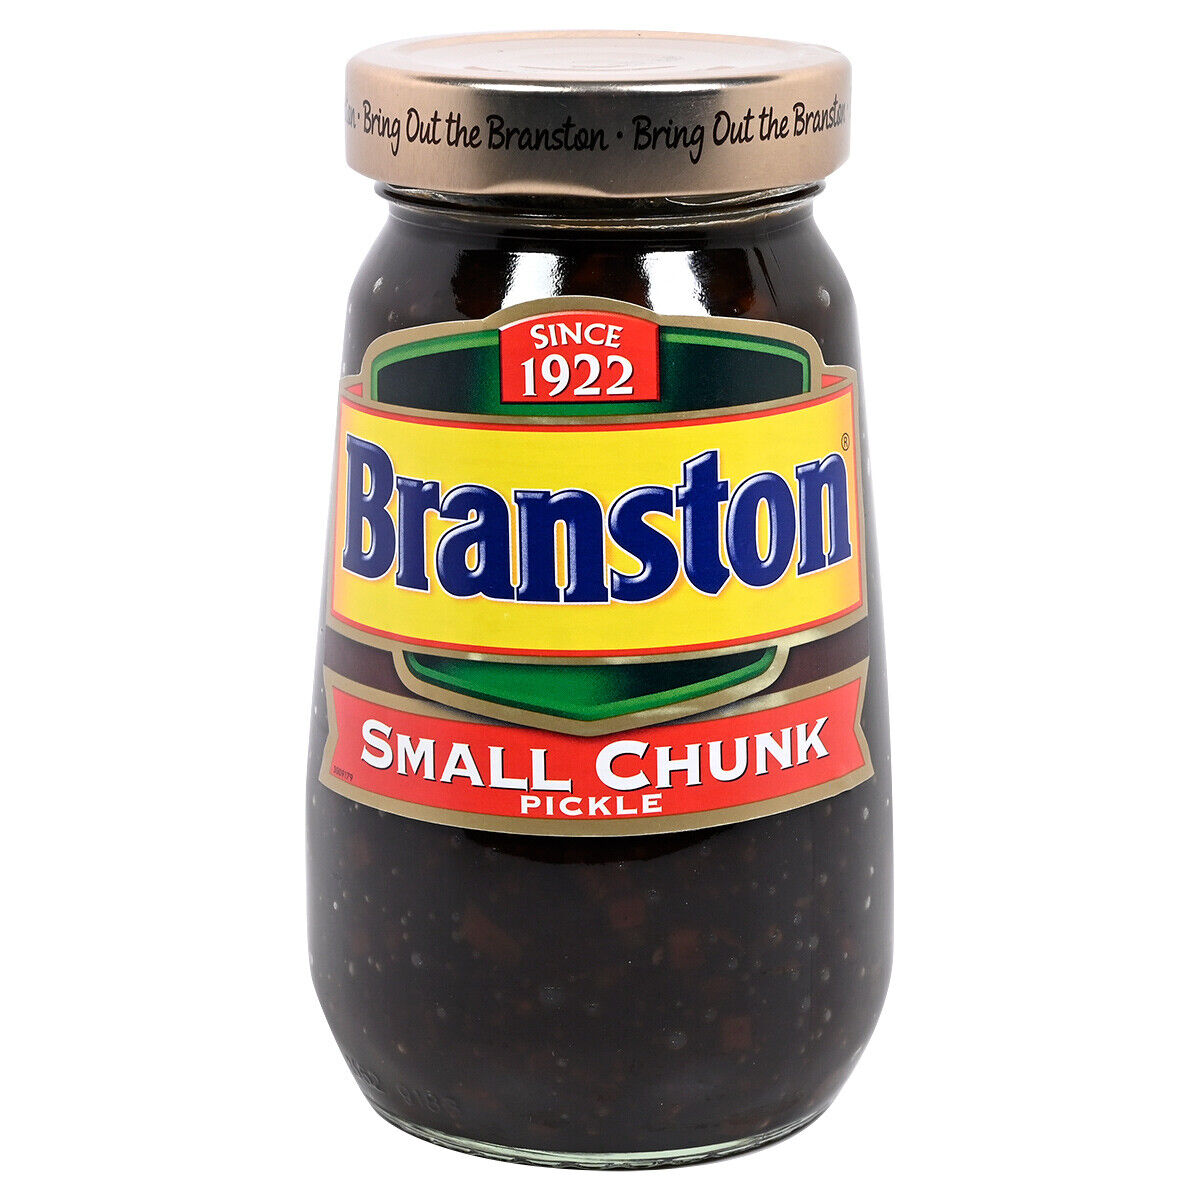 Branston Small Chunk Pickle - 18.34oz (520g)